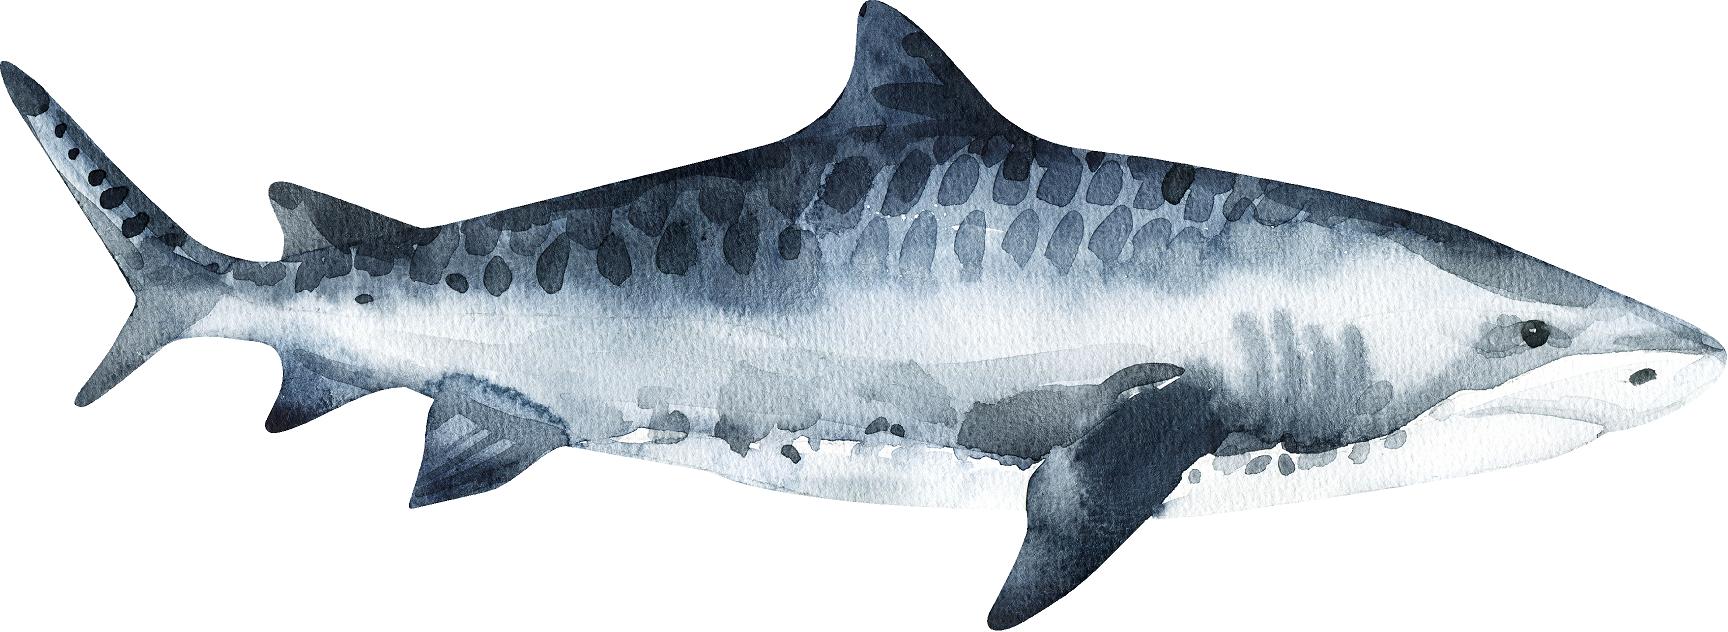 Watercolor Tiger Shark Wall Decal Removable Sea Animal Fabric Vinyl Wall Sticker